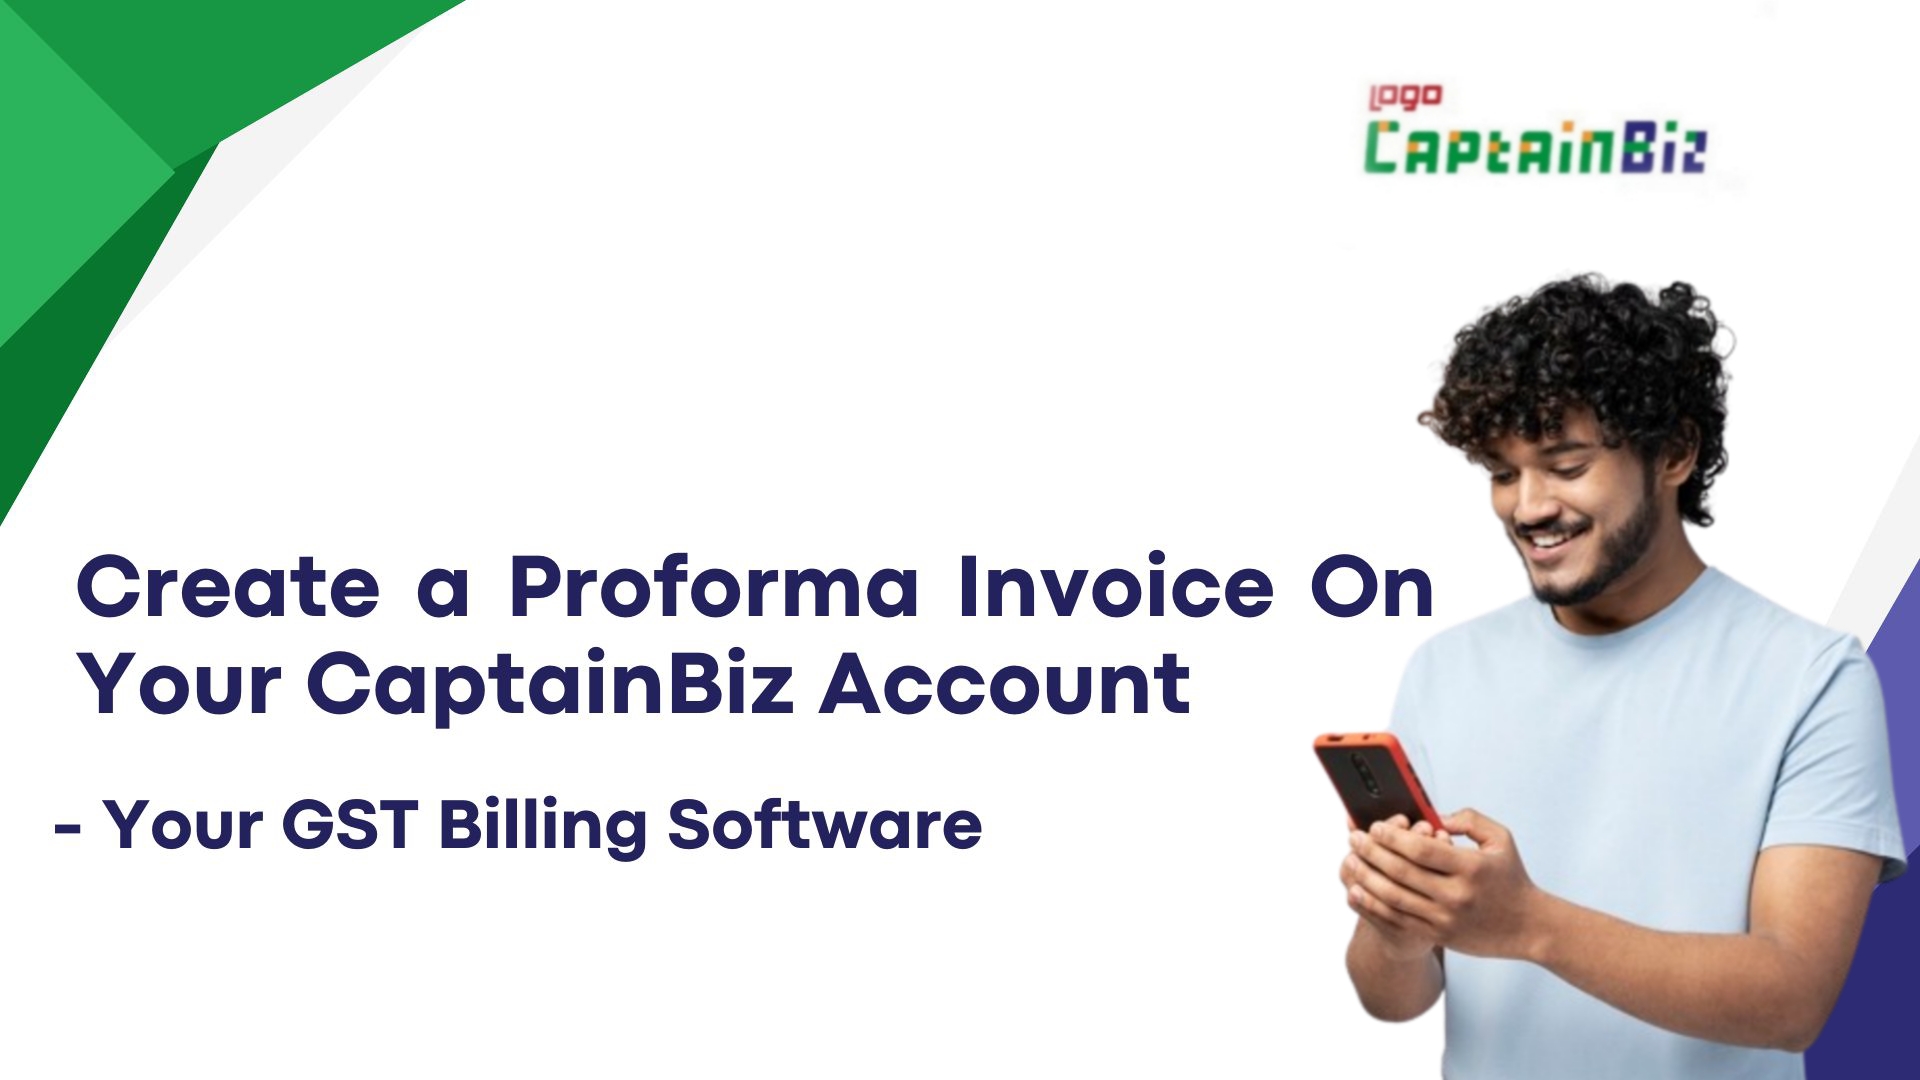 Create Proforma Invoice With CaptainBiz Account